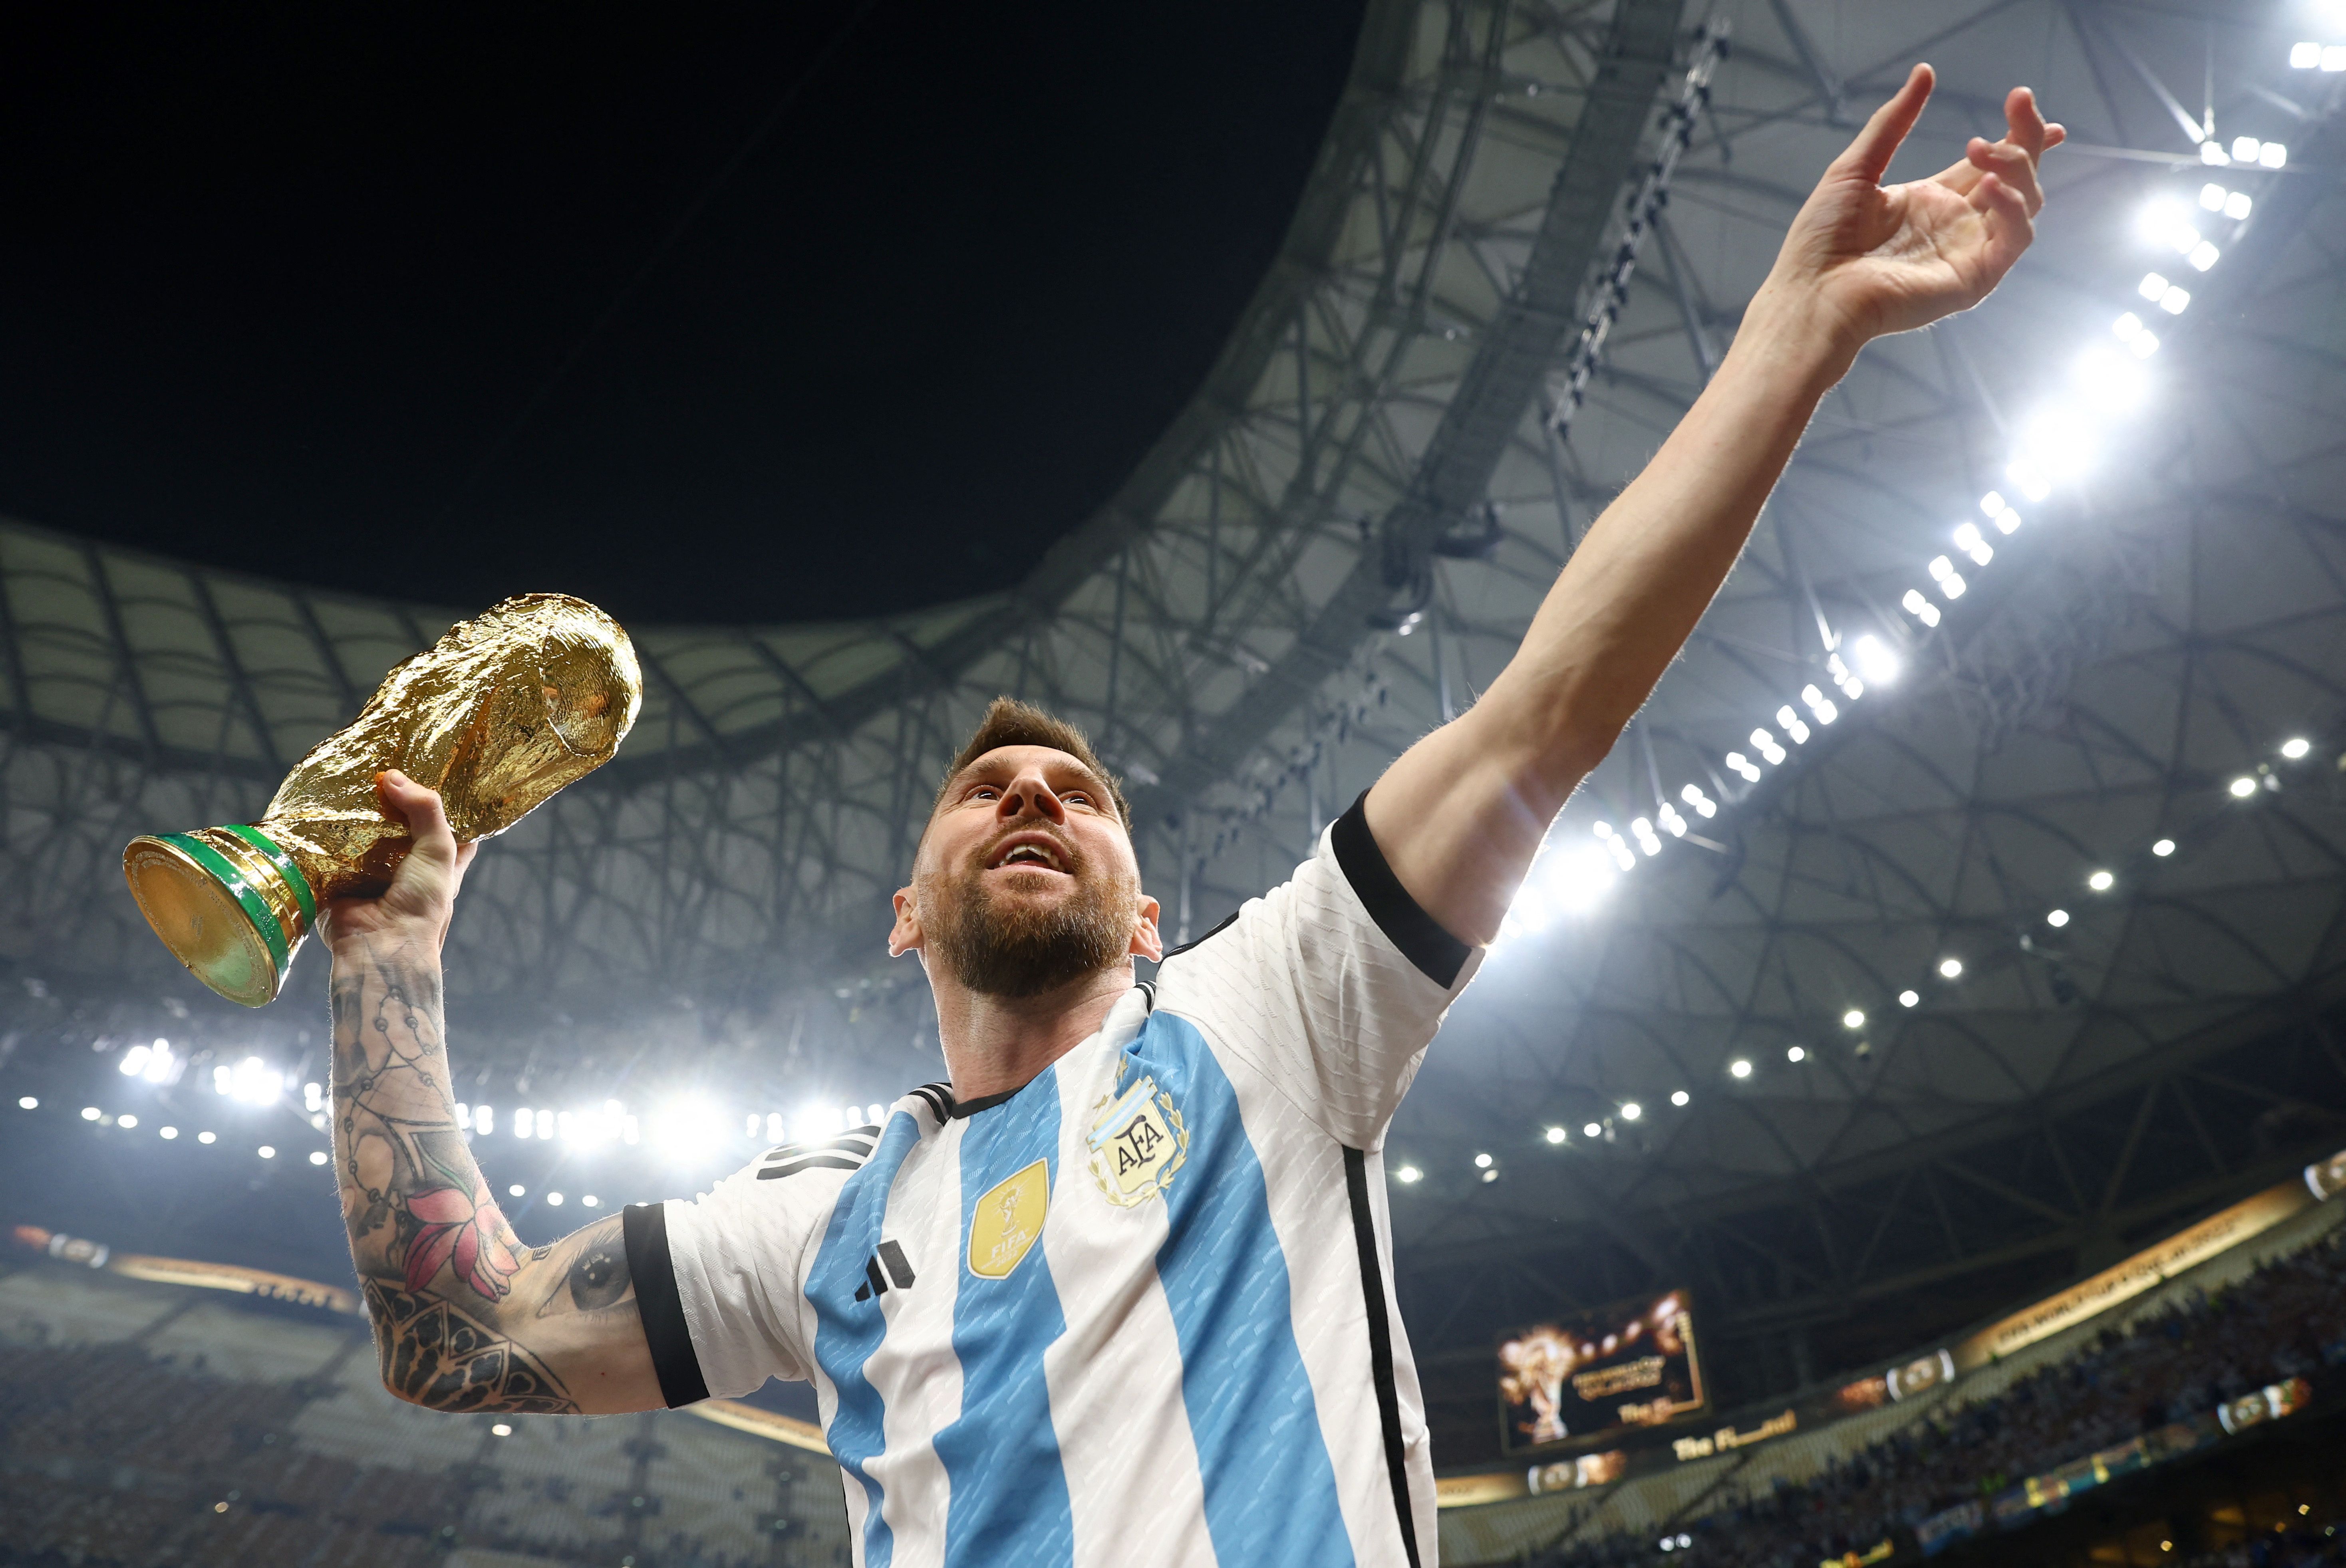 Fondos de pantalla de Messi Campeon del Mundo FondosMil